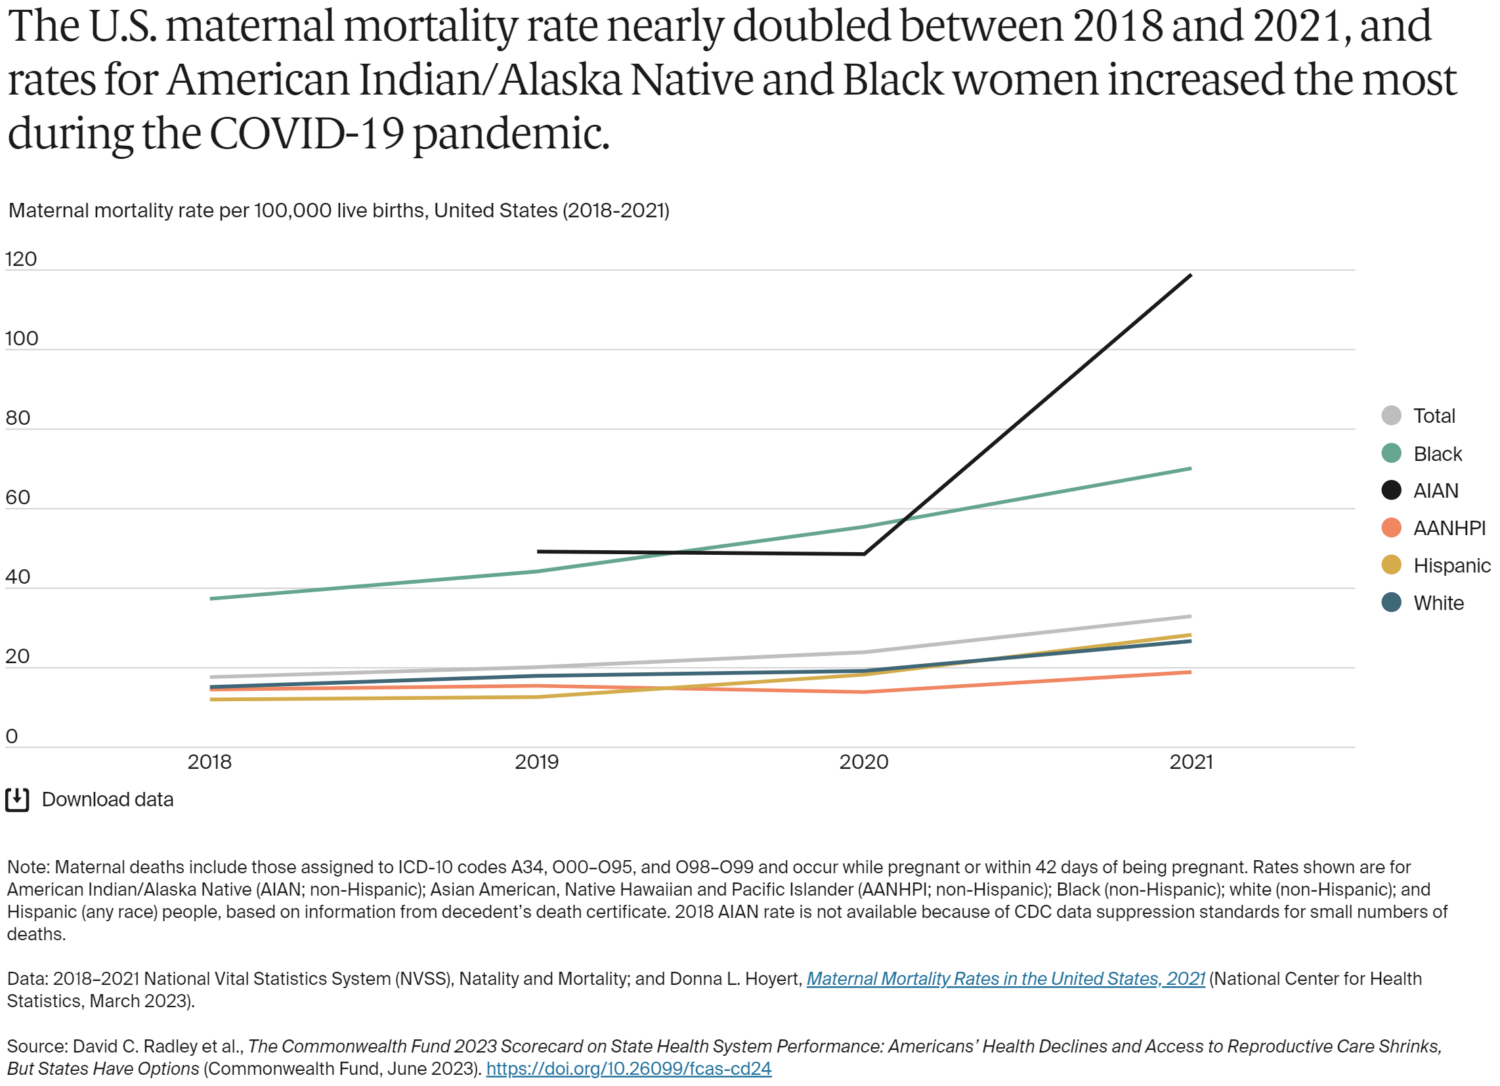 U.S. maternal mortality rate graph